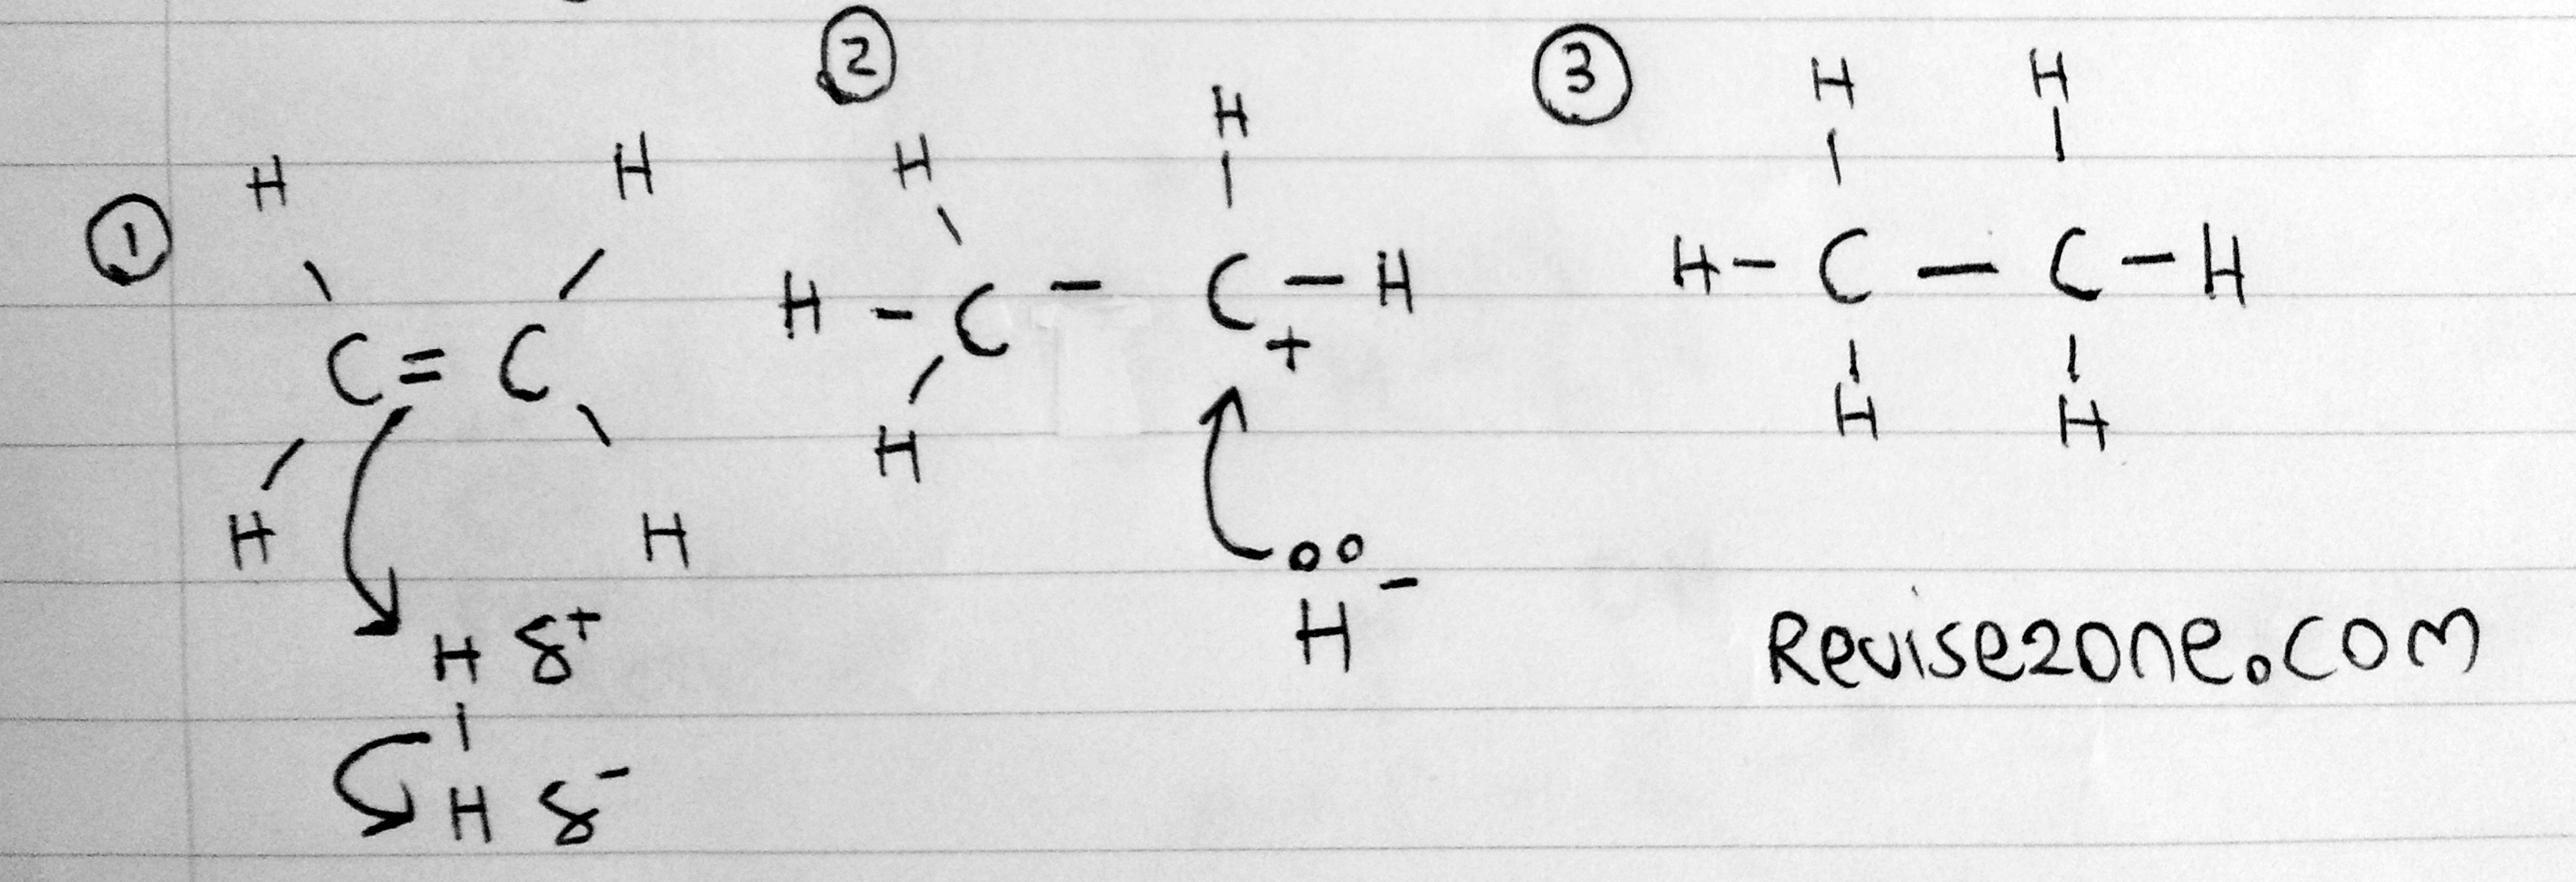 hydrogenation of ethene